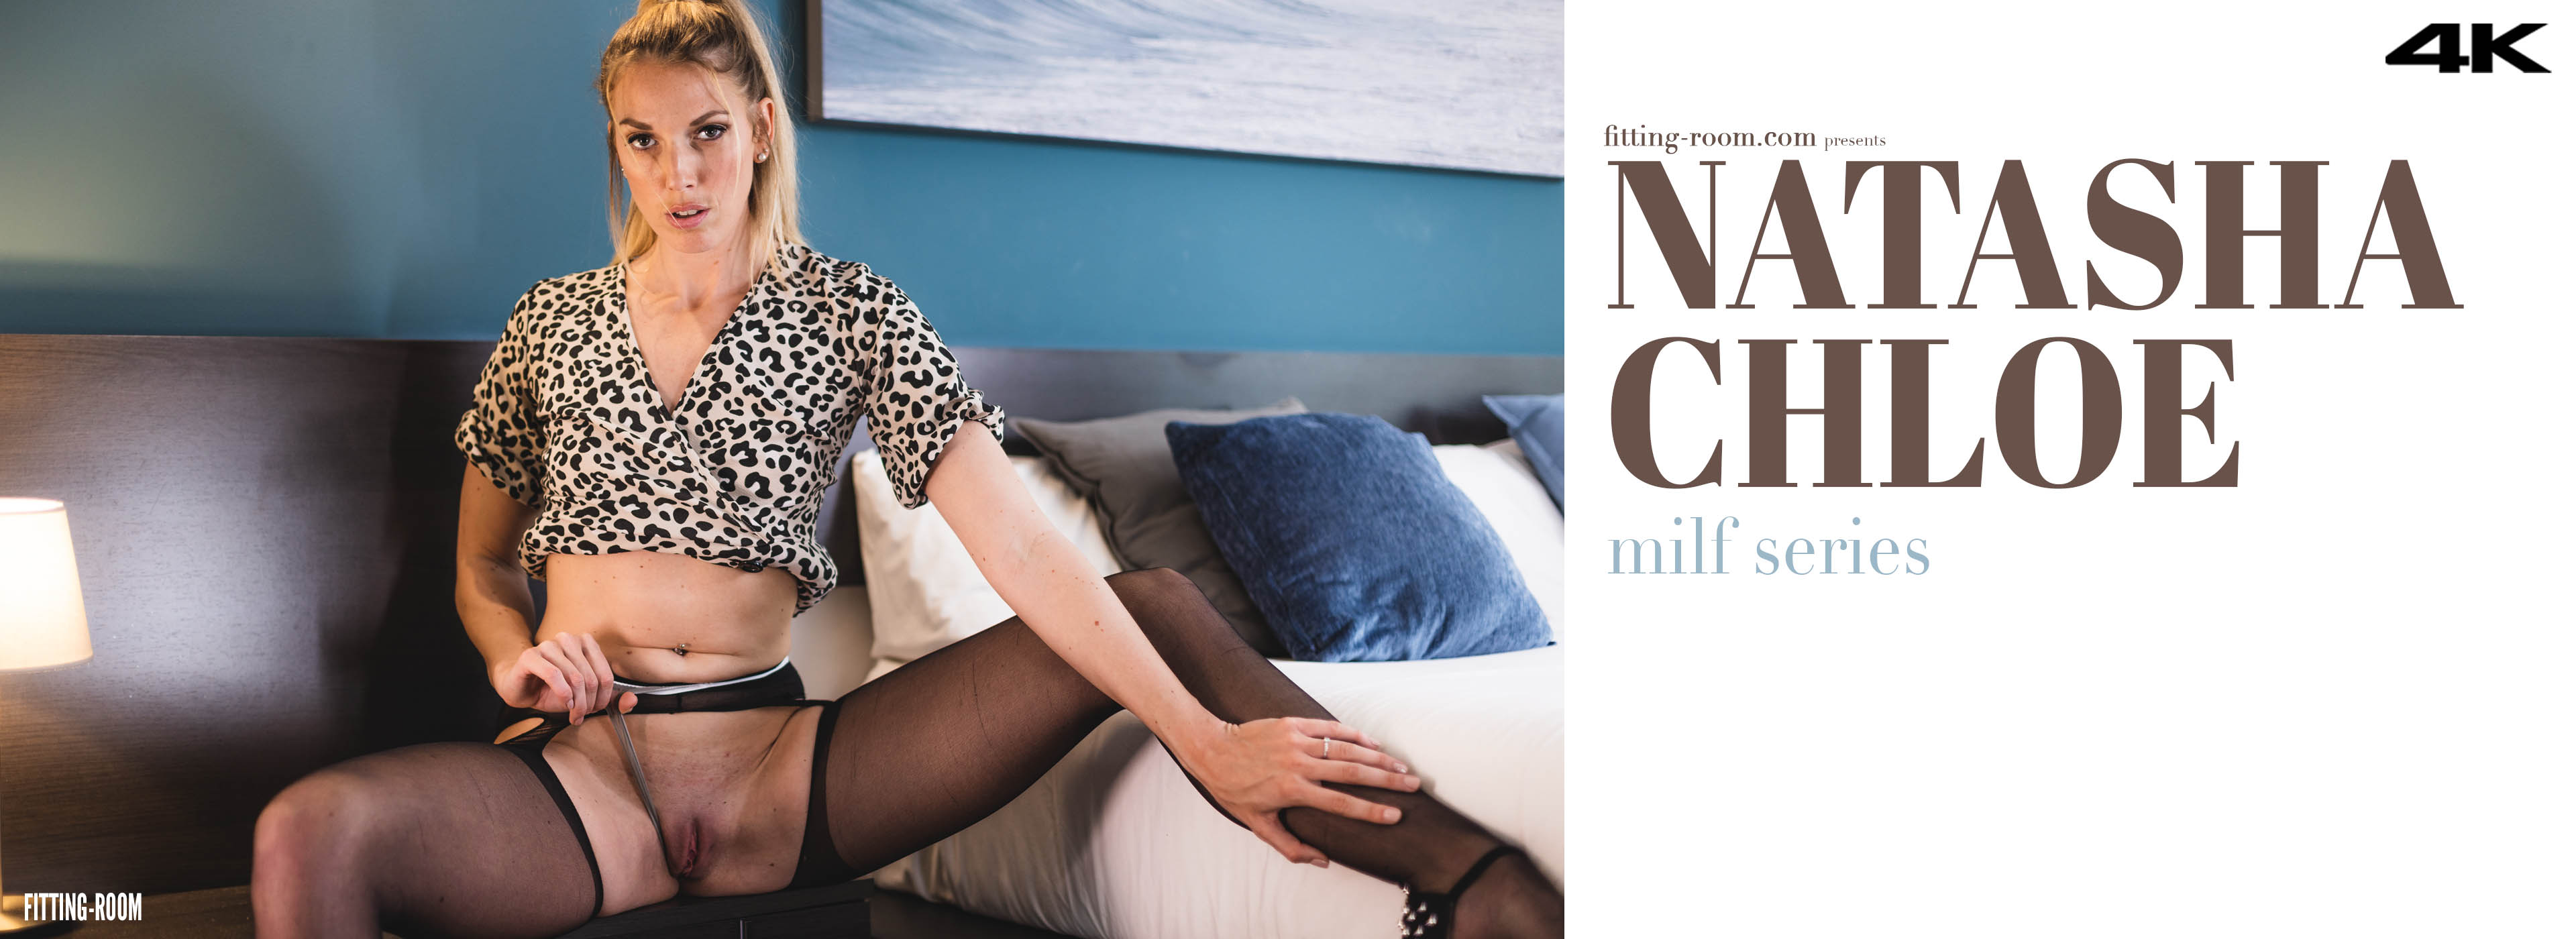 Natasha Chloe | A Mature Nympho Perversion